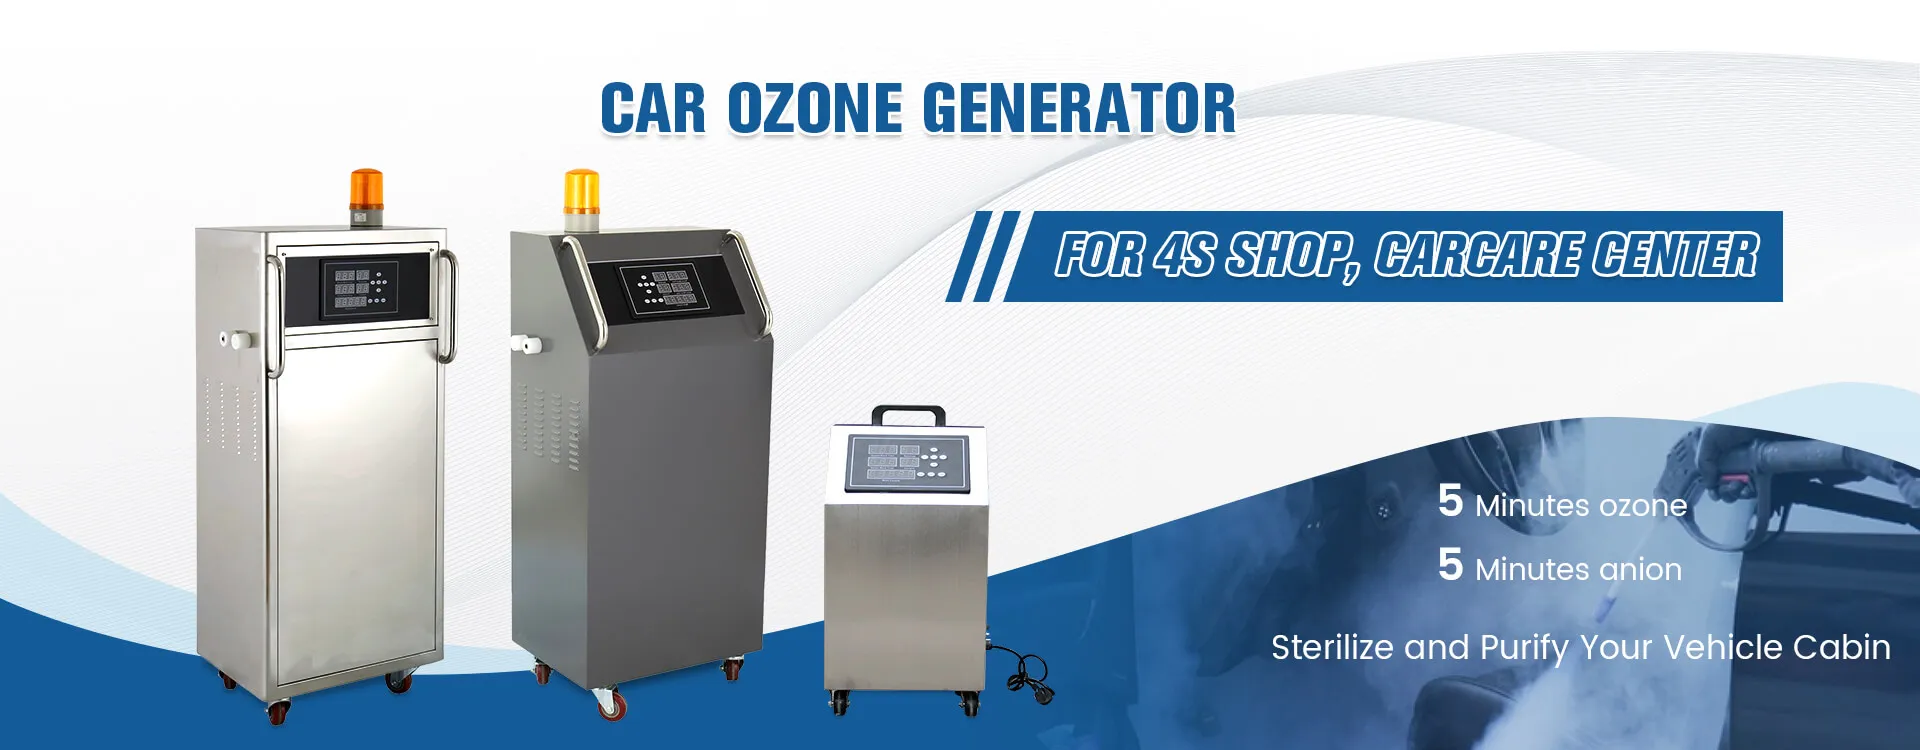 Car Ozone Generator